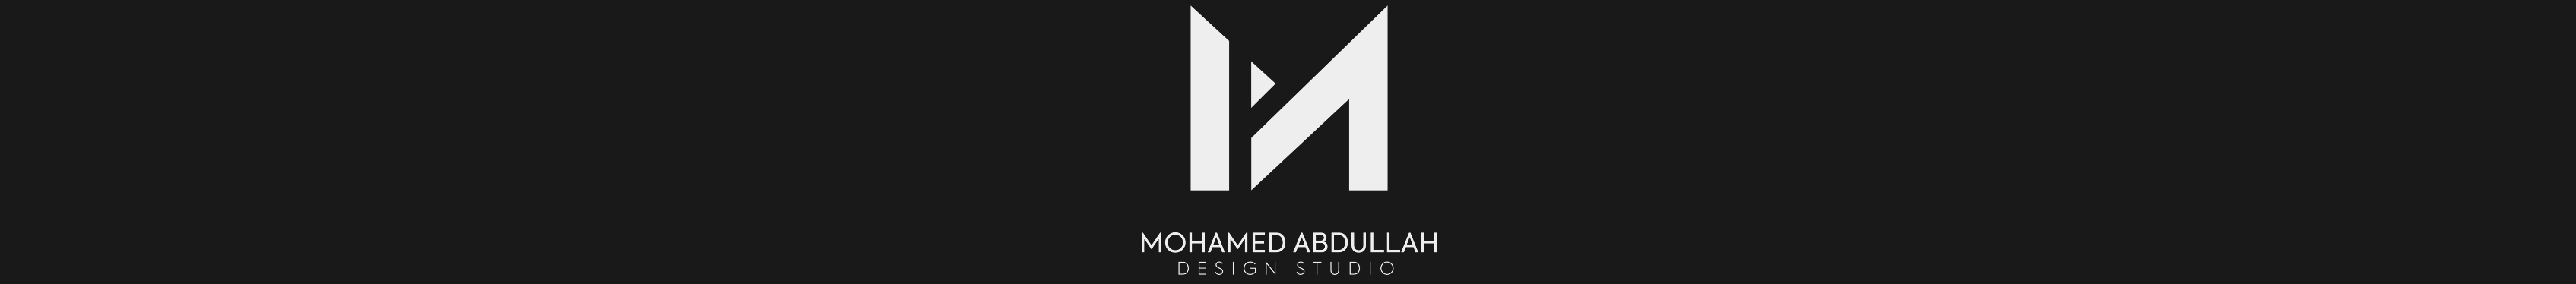 Muhammed Abdallahs profilbanner